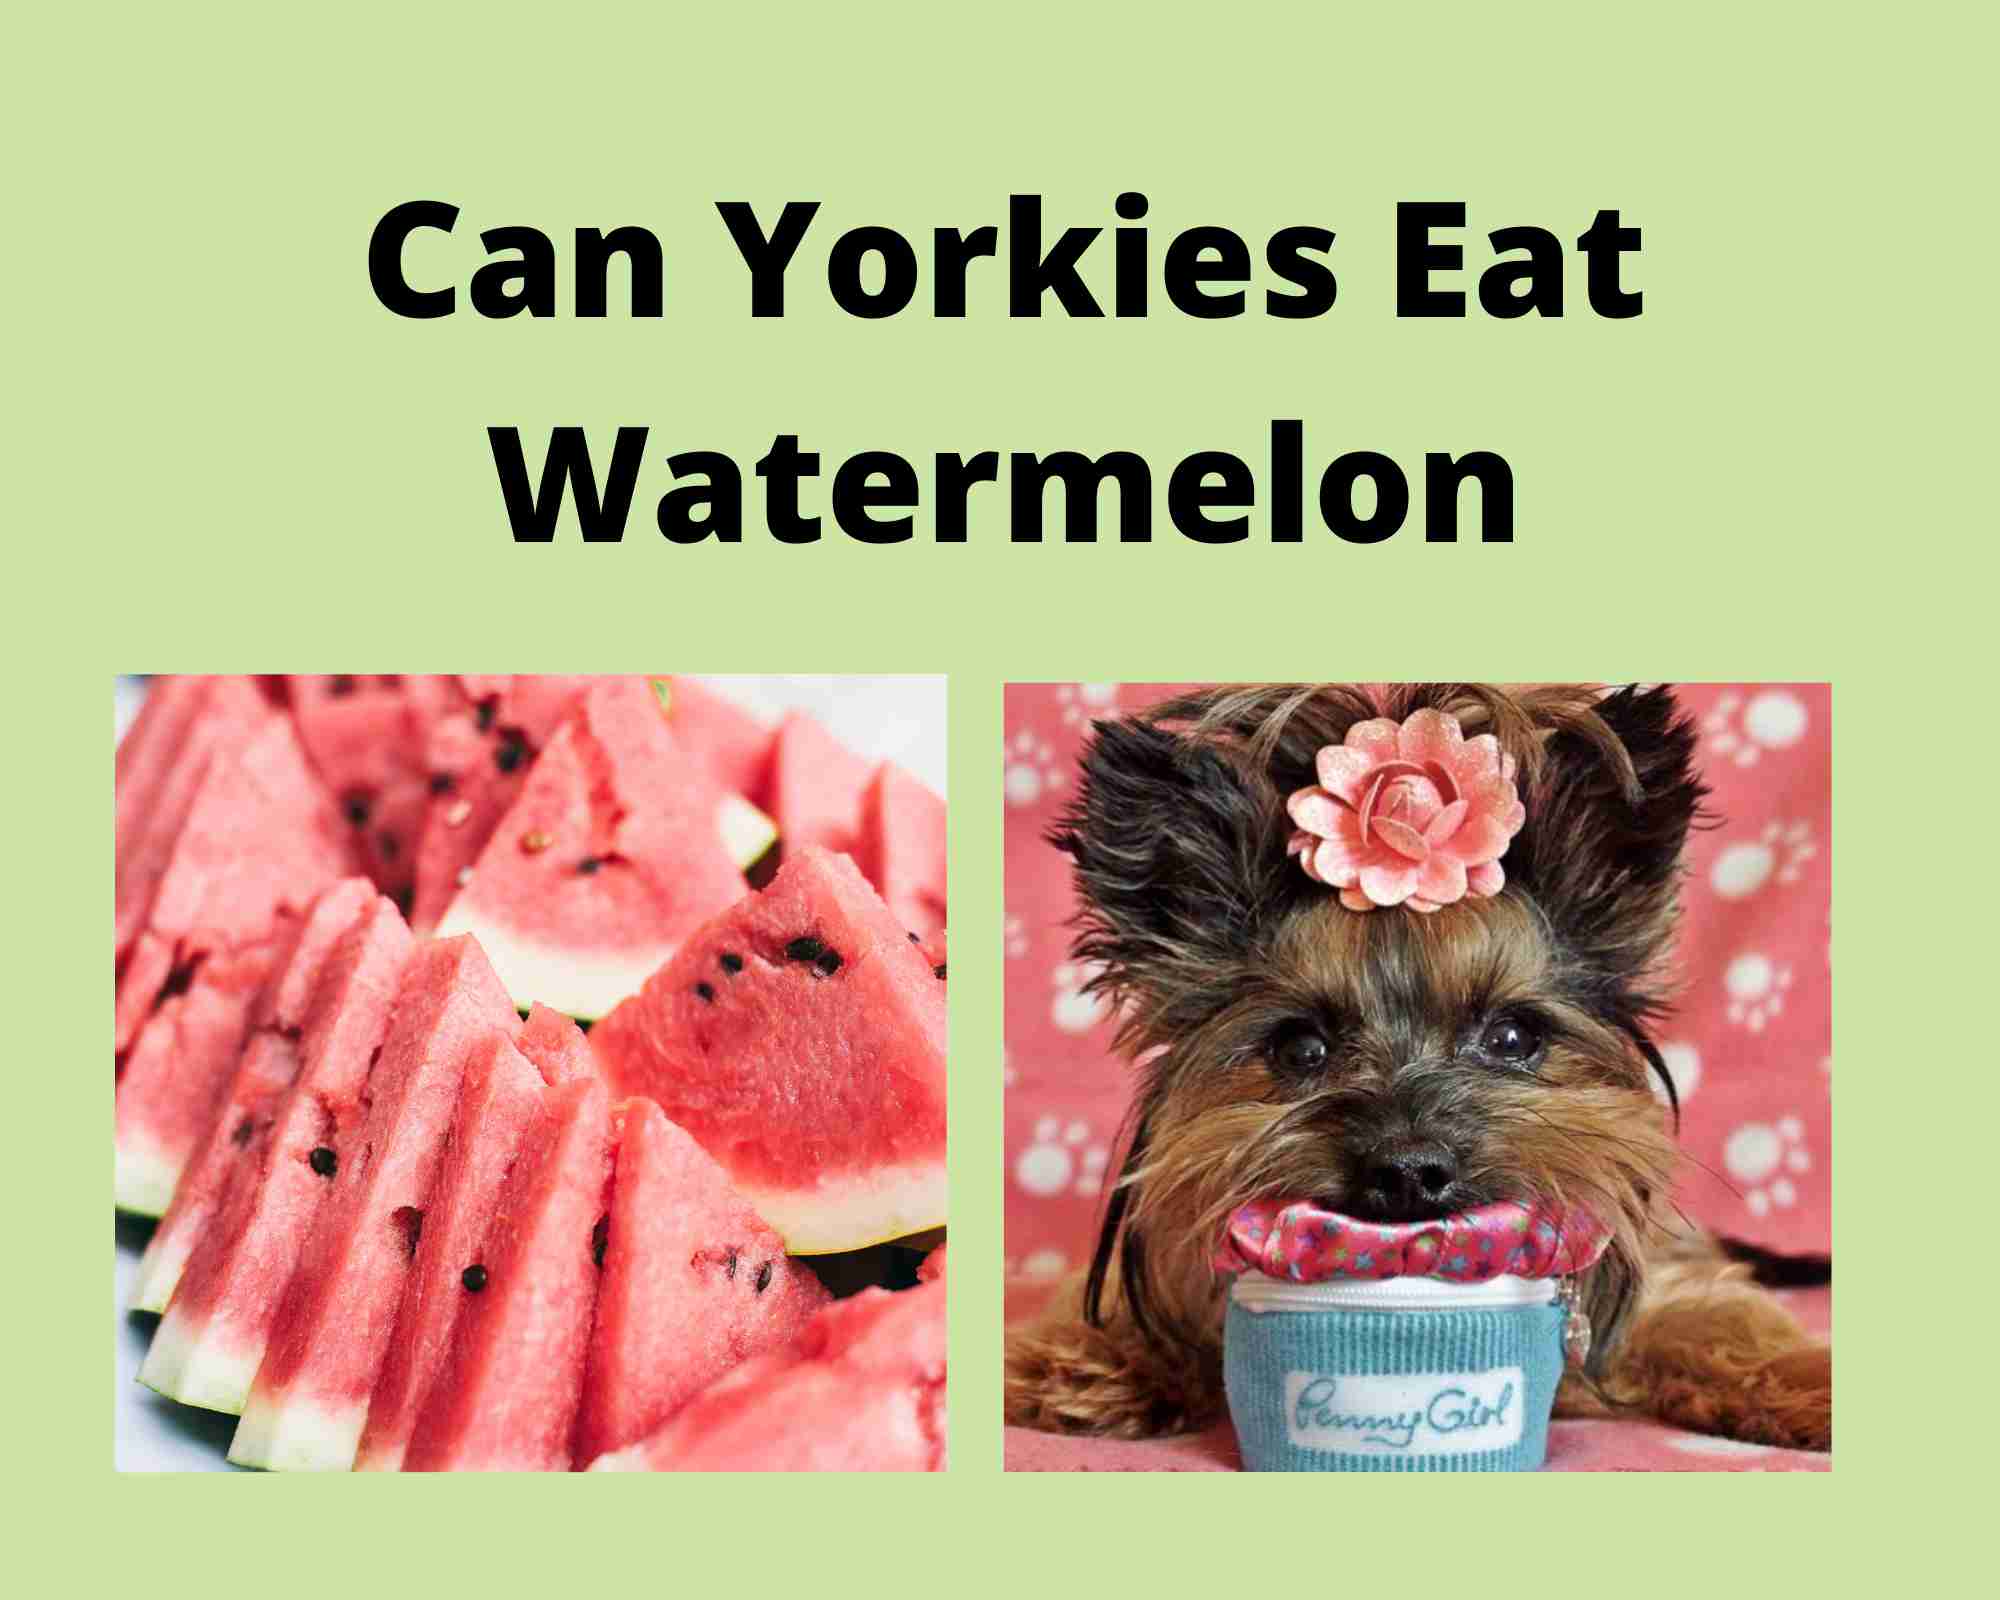 Can Yorkies Eat Watermelon